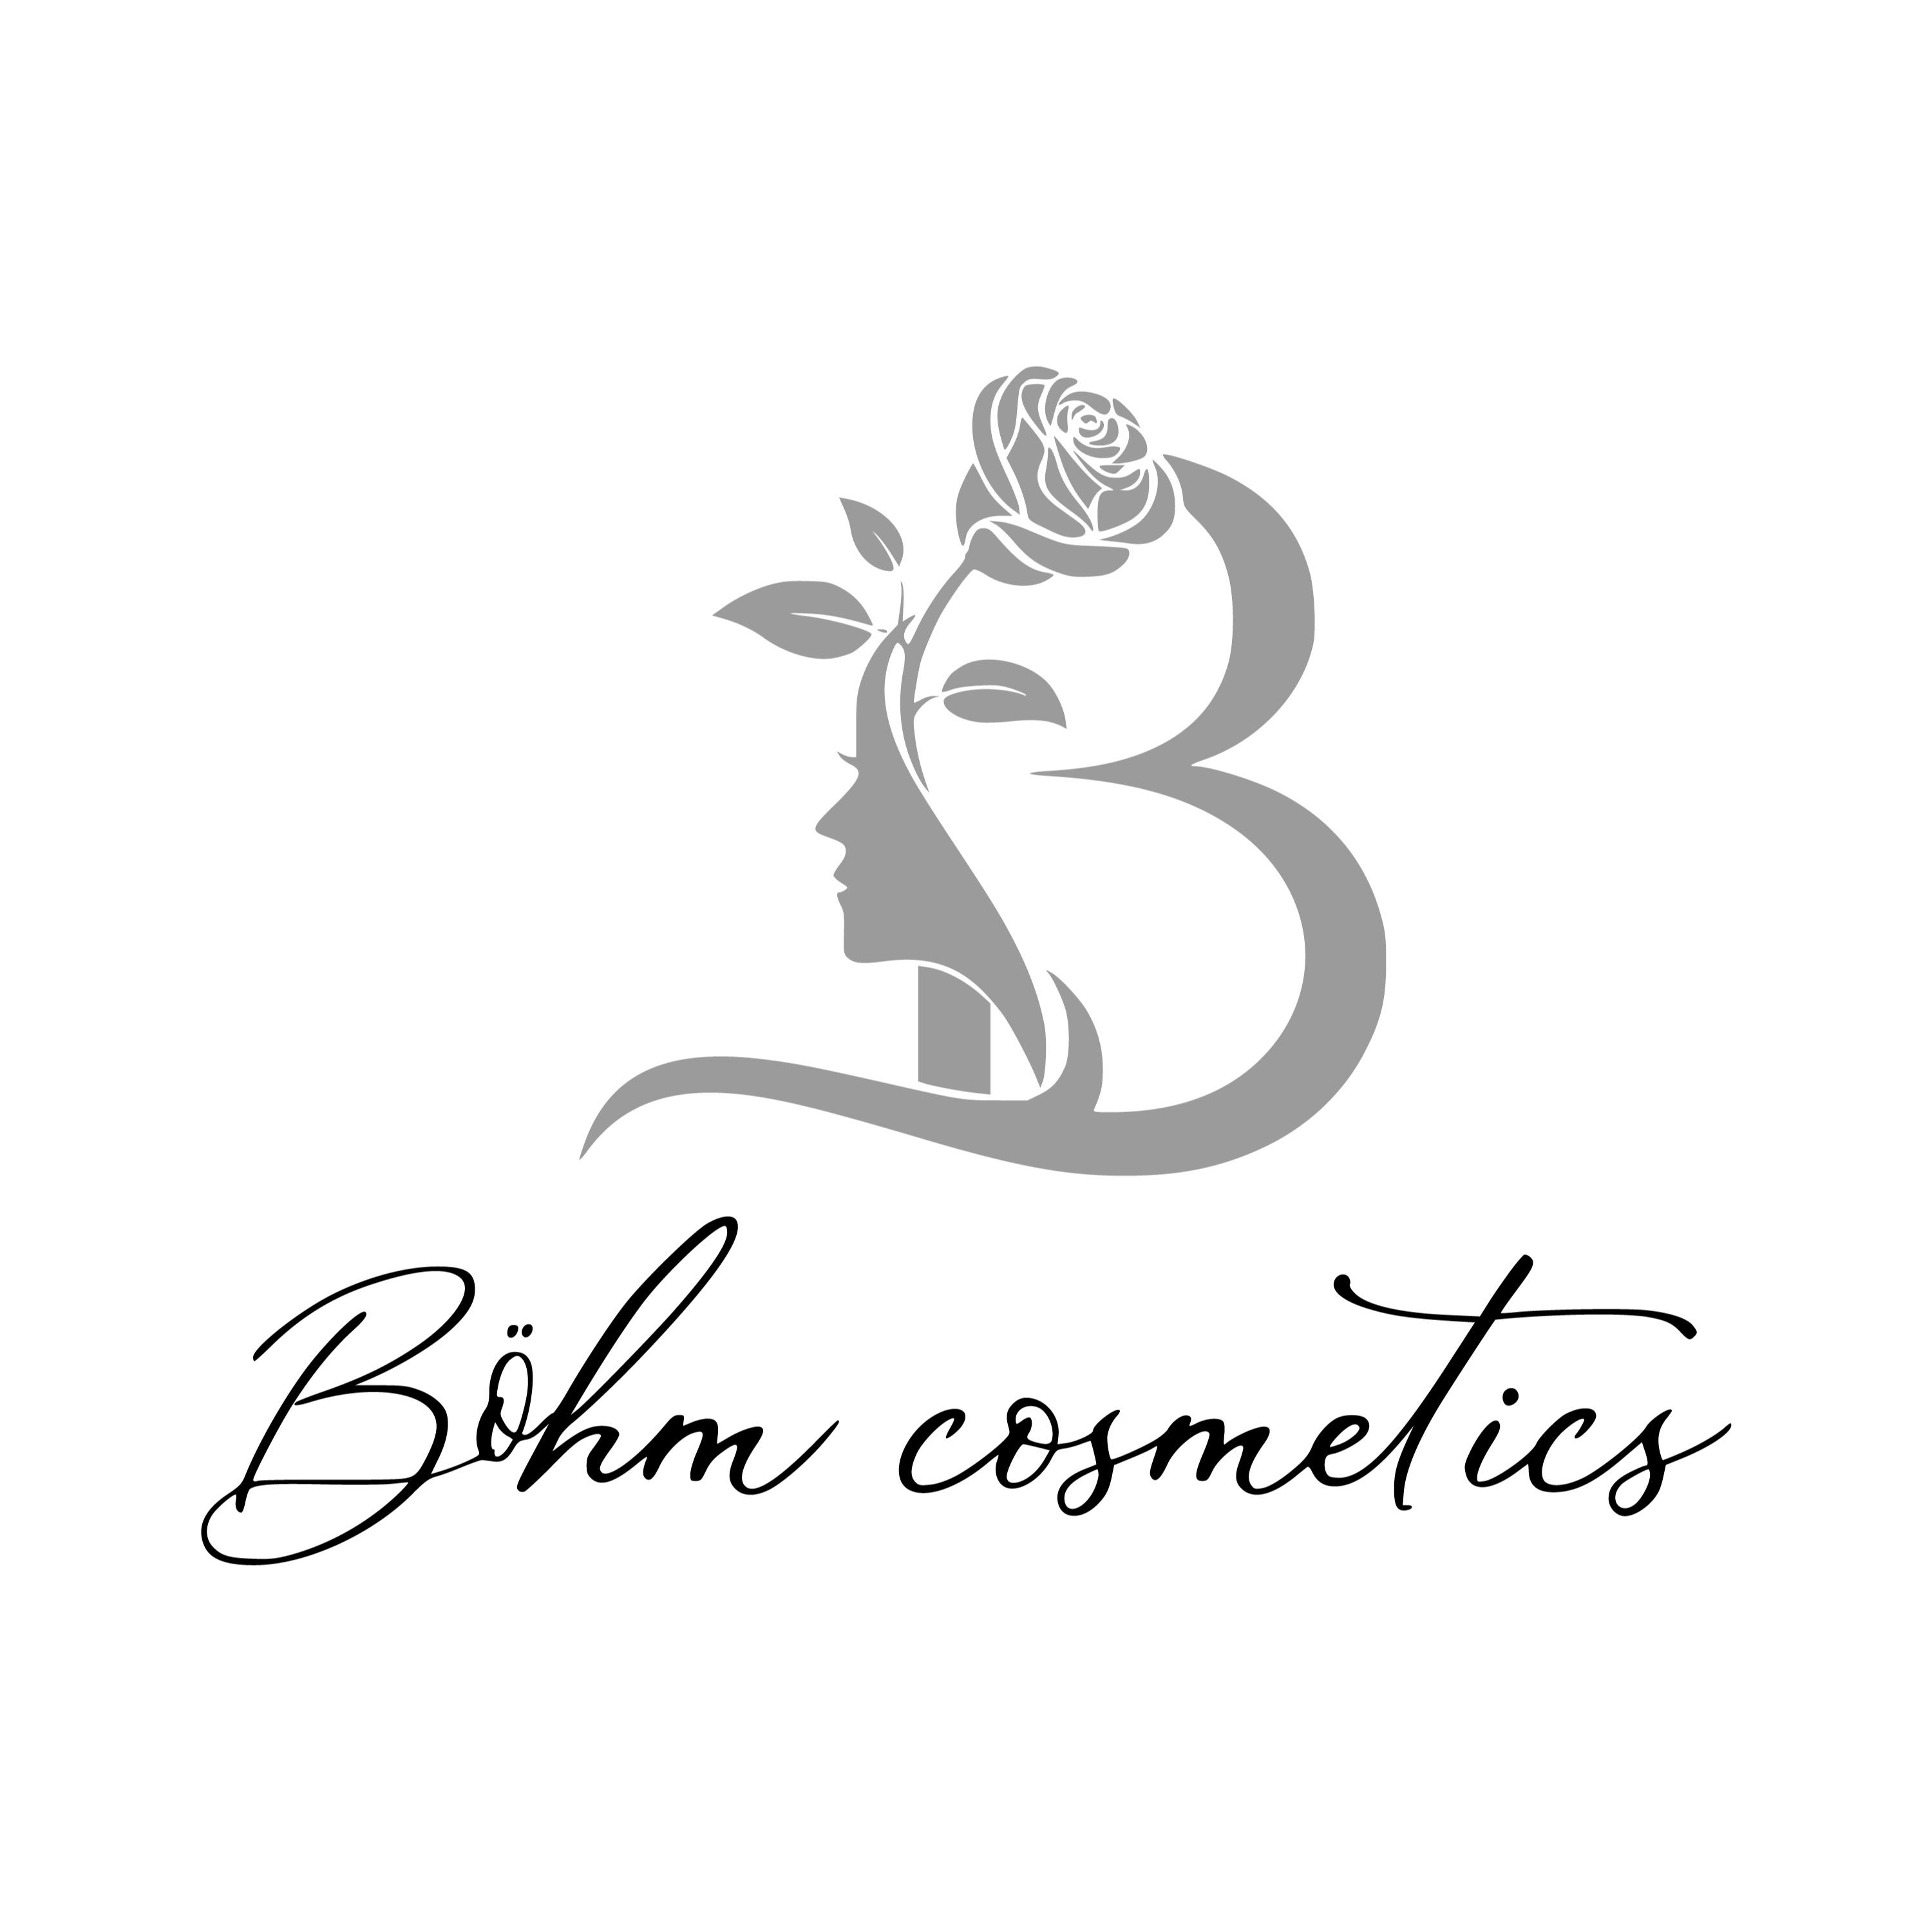 Böhm cosmetics - Kosmetikstudio München  